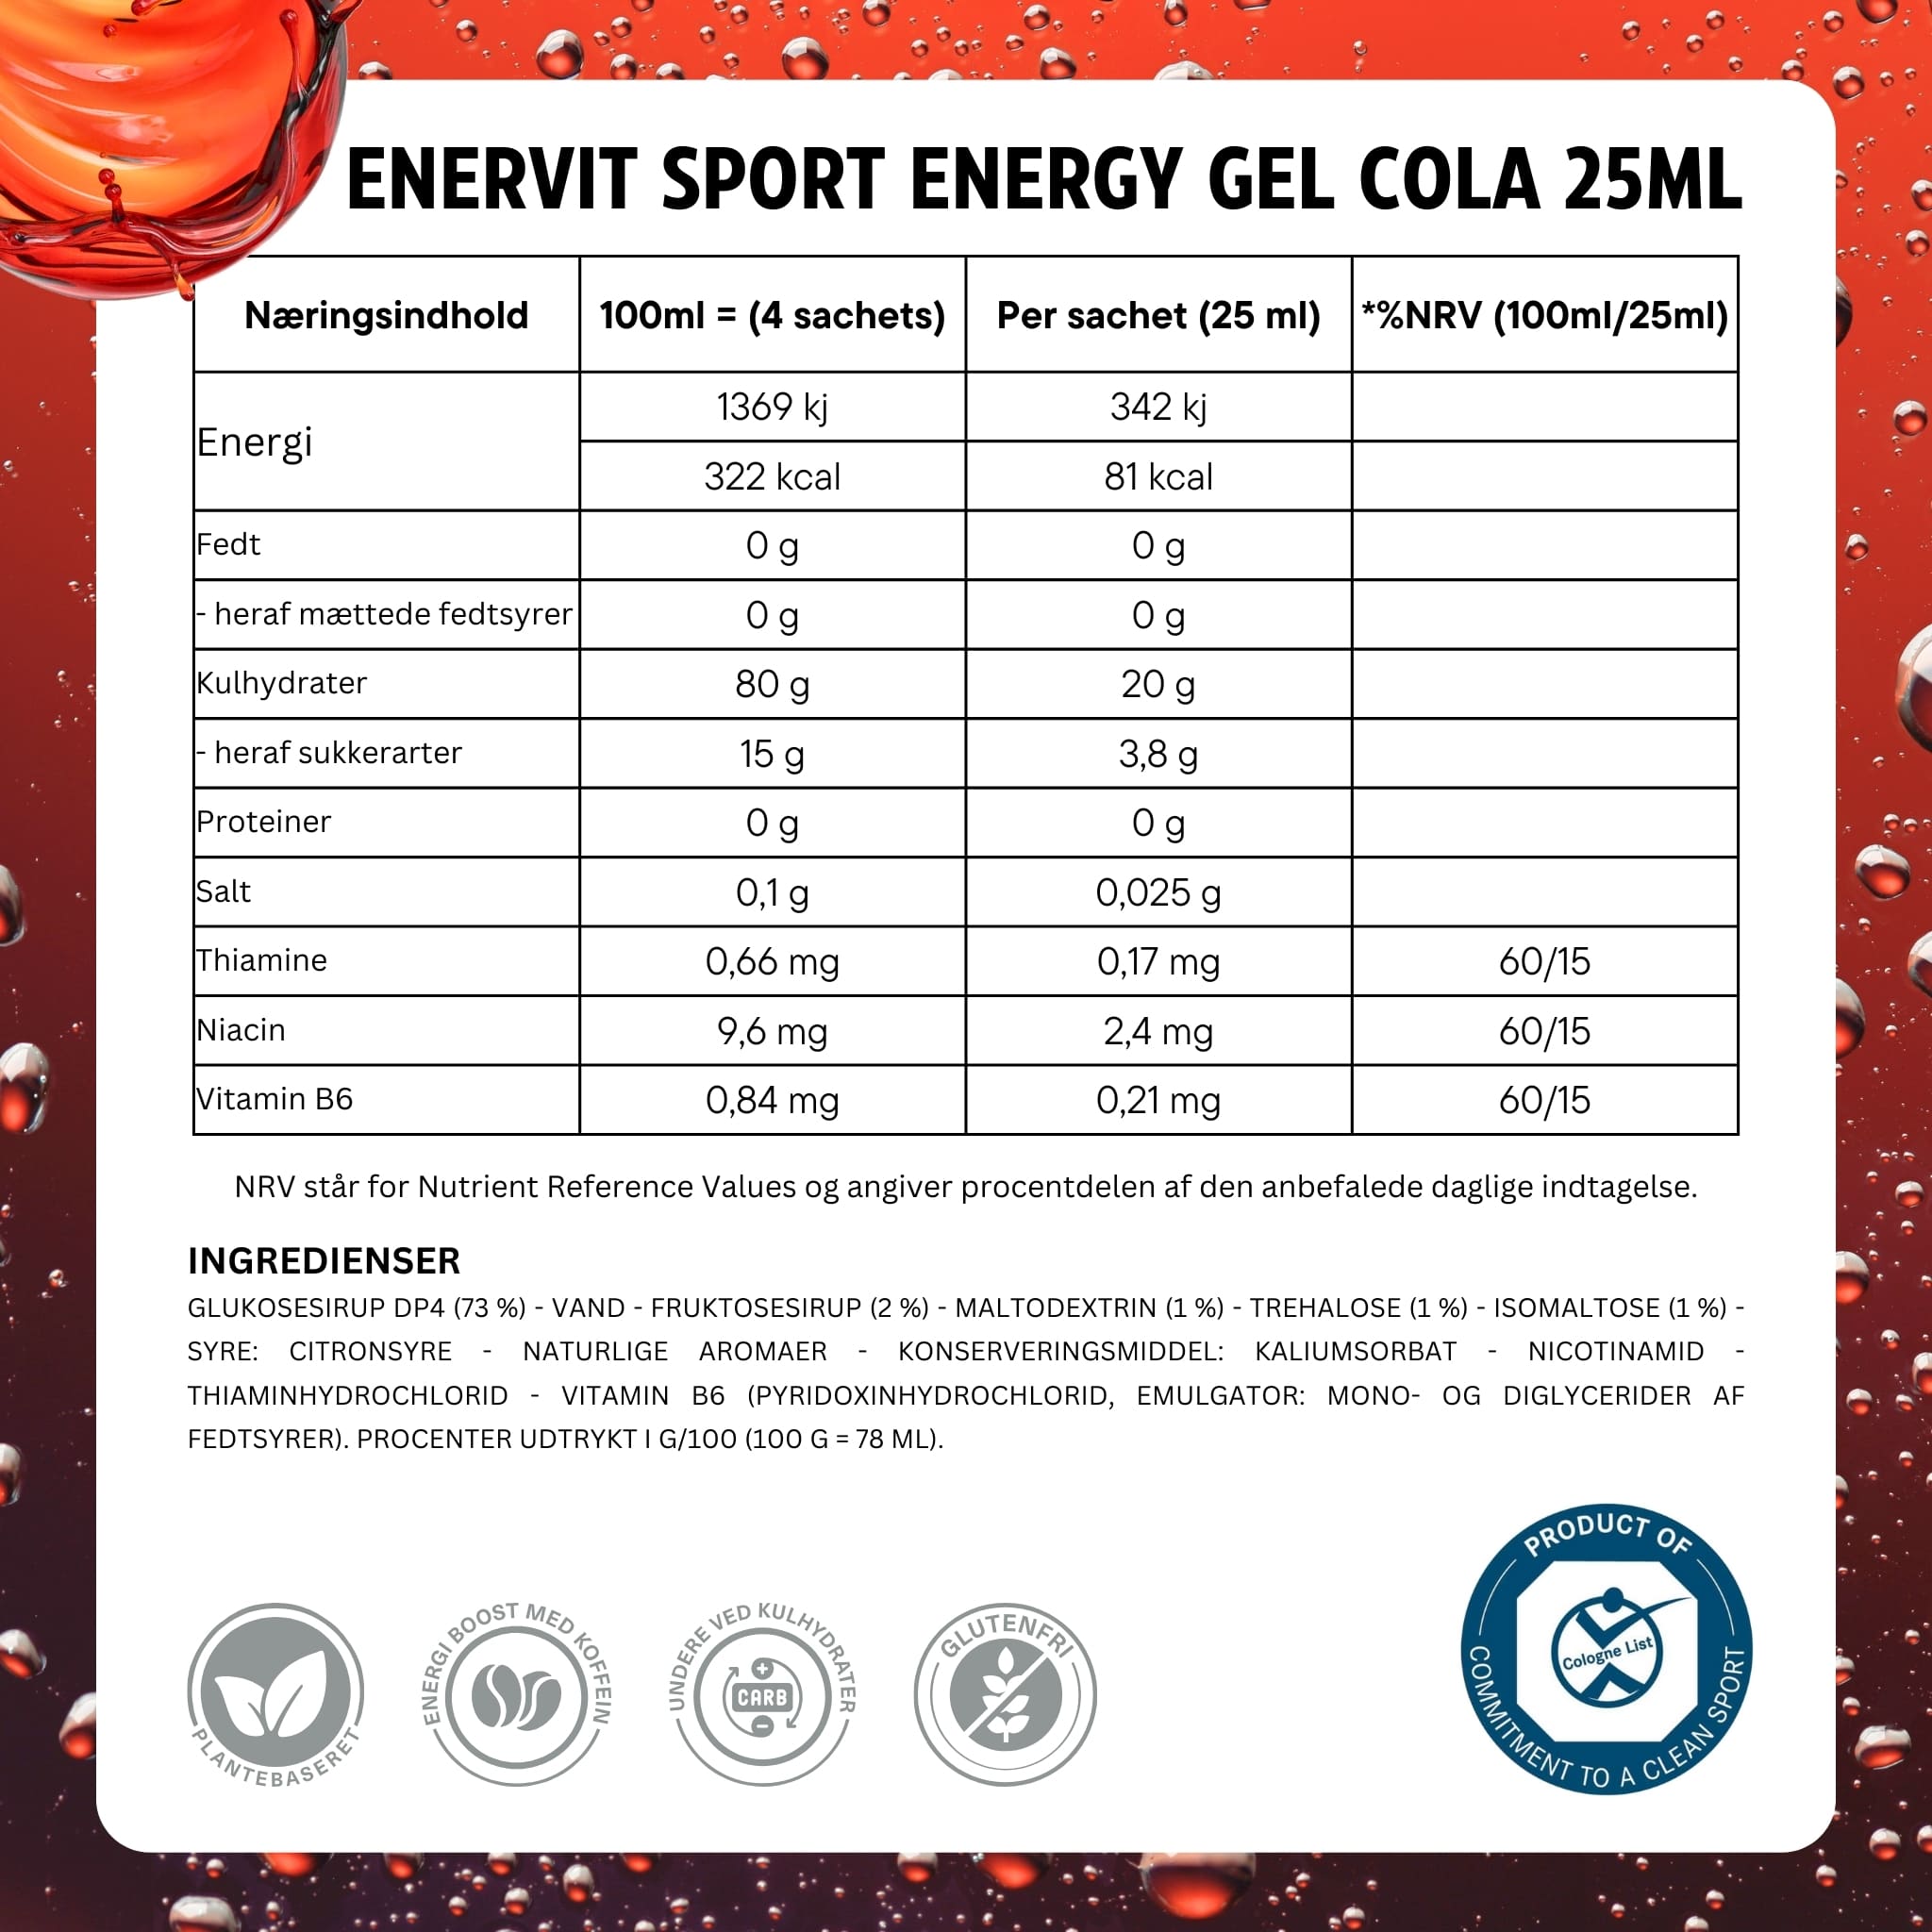 Enervit Sport Energy Gel Cola 25ml - Danish